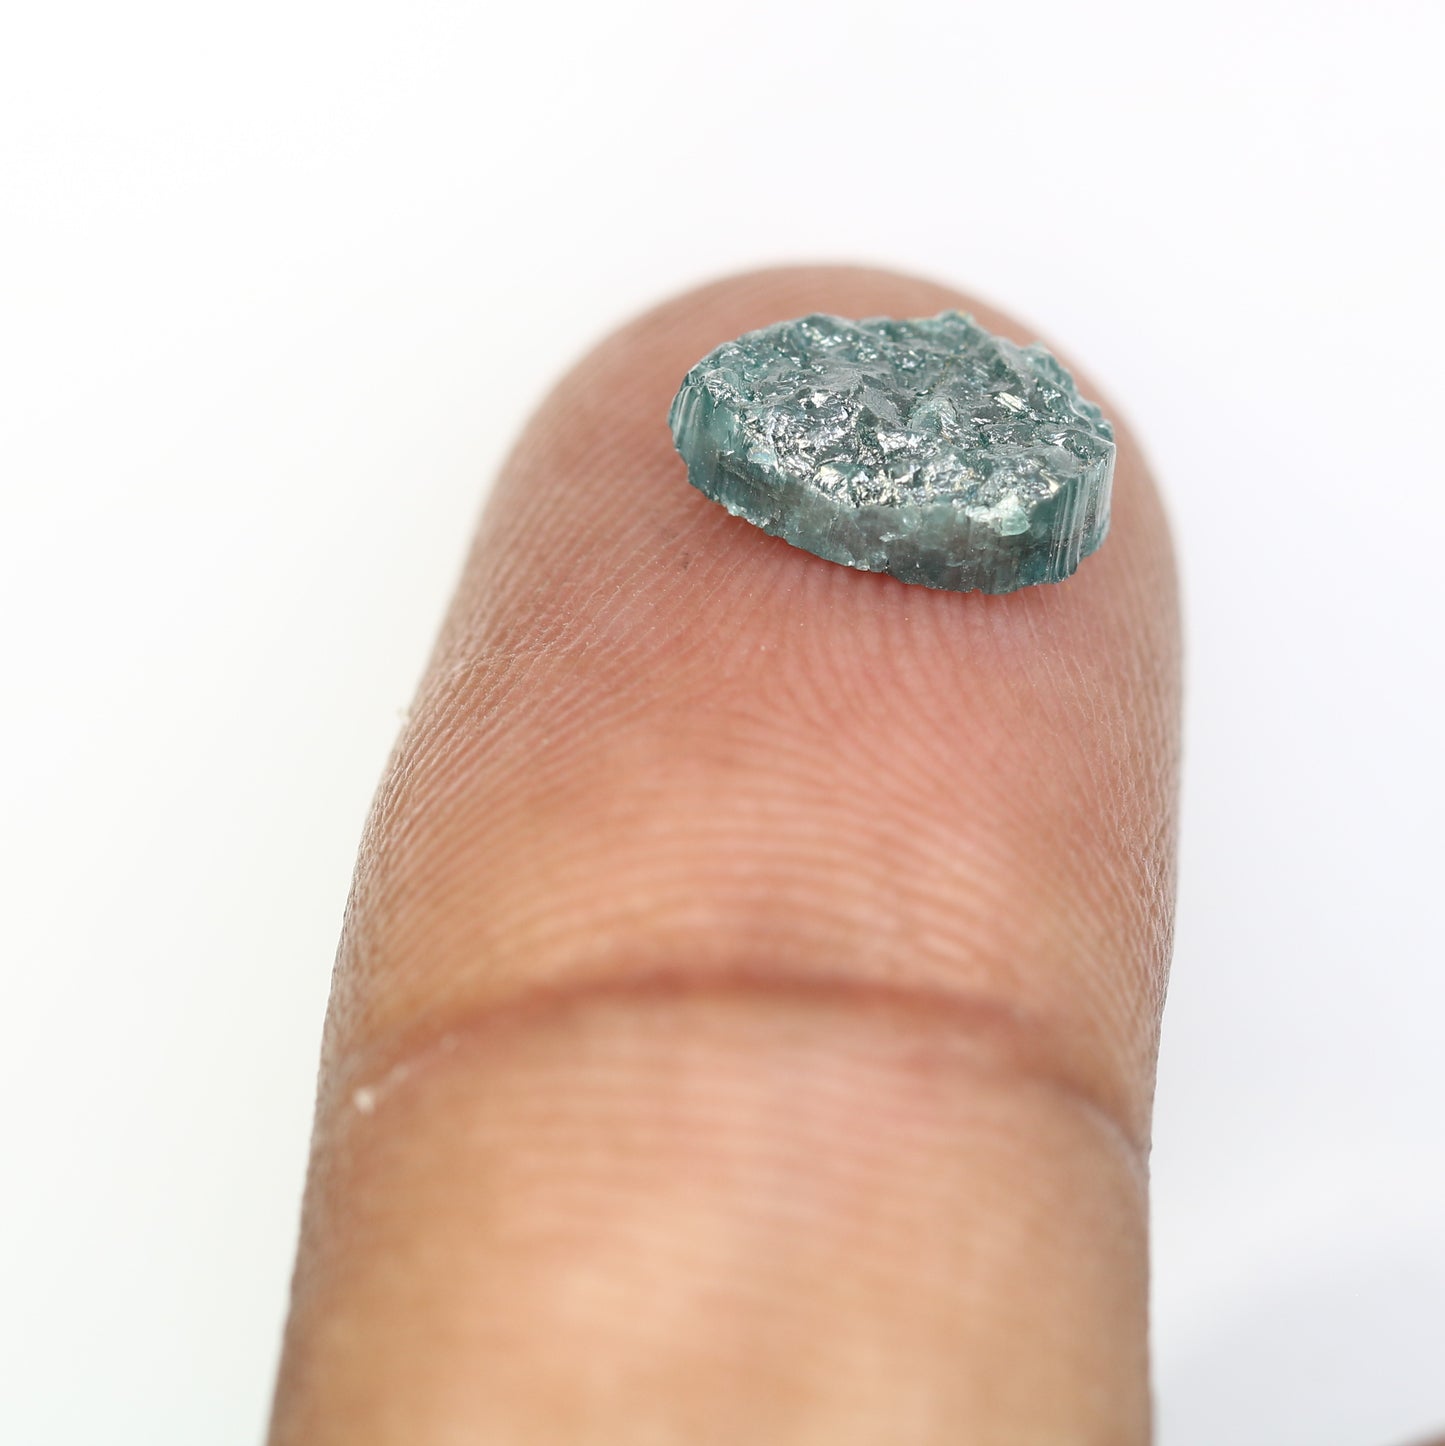 2.14 Carat Pear Cut Diamond Blue Blue Color Raw Rough Diamond For Vintage Ring